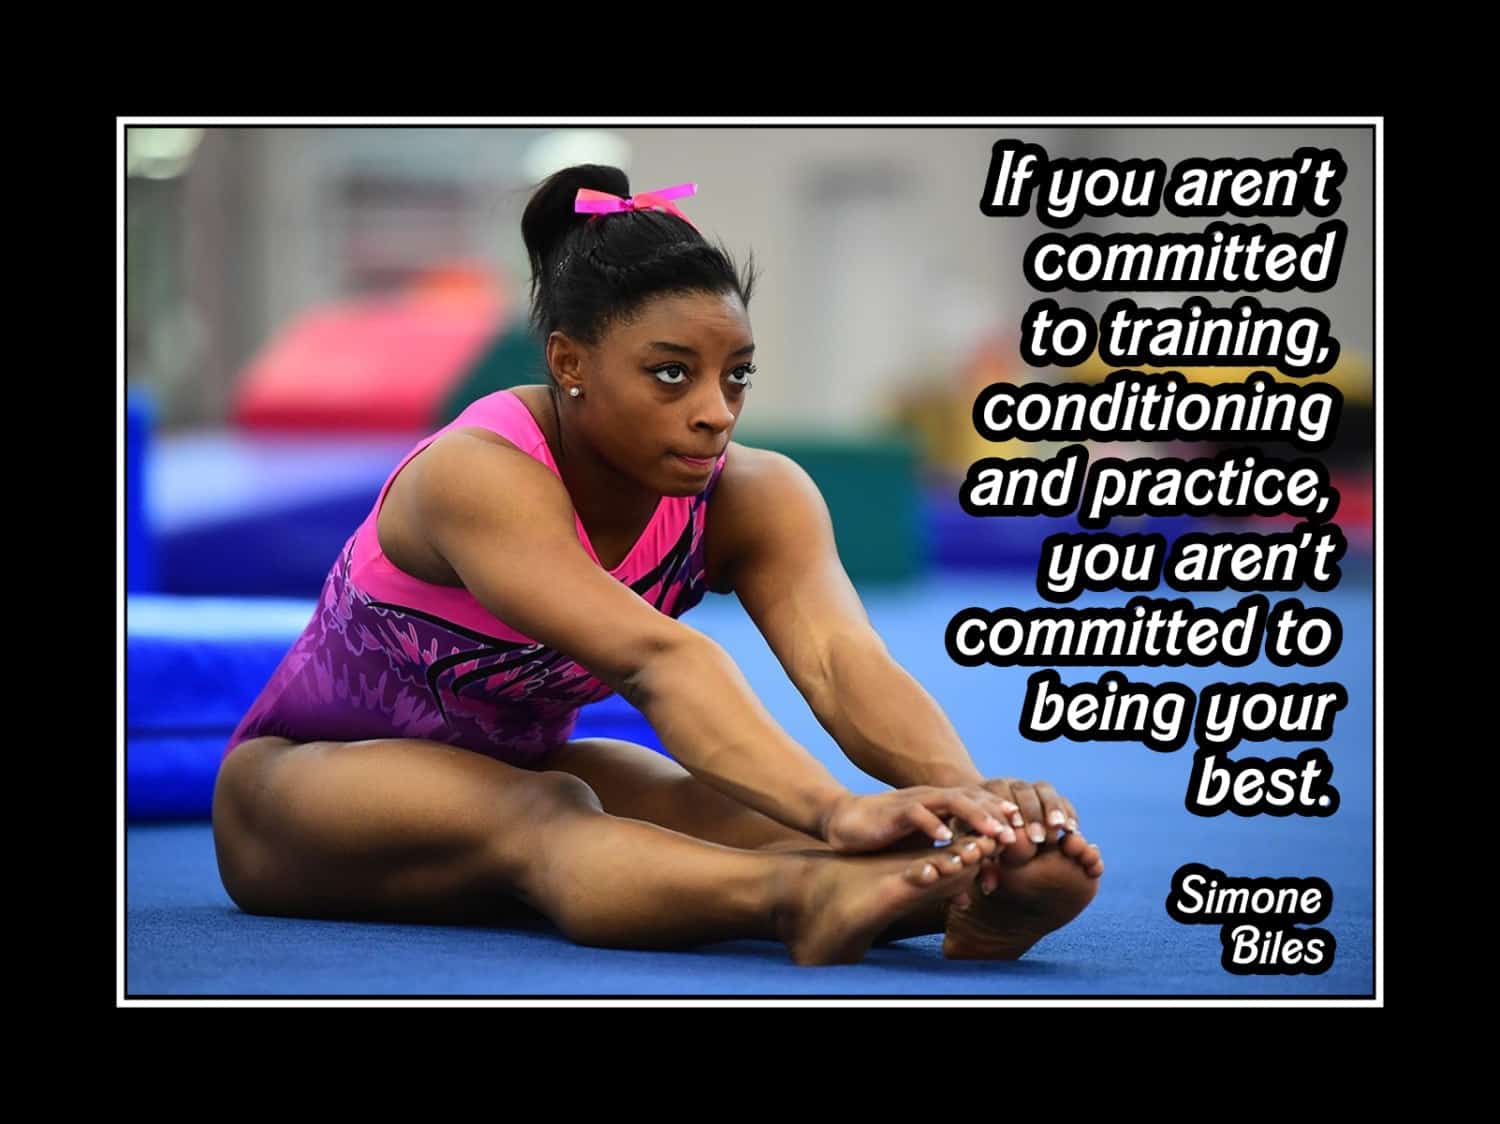 Simone Biles quote on practice and commitment